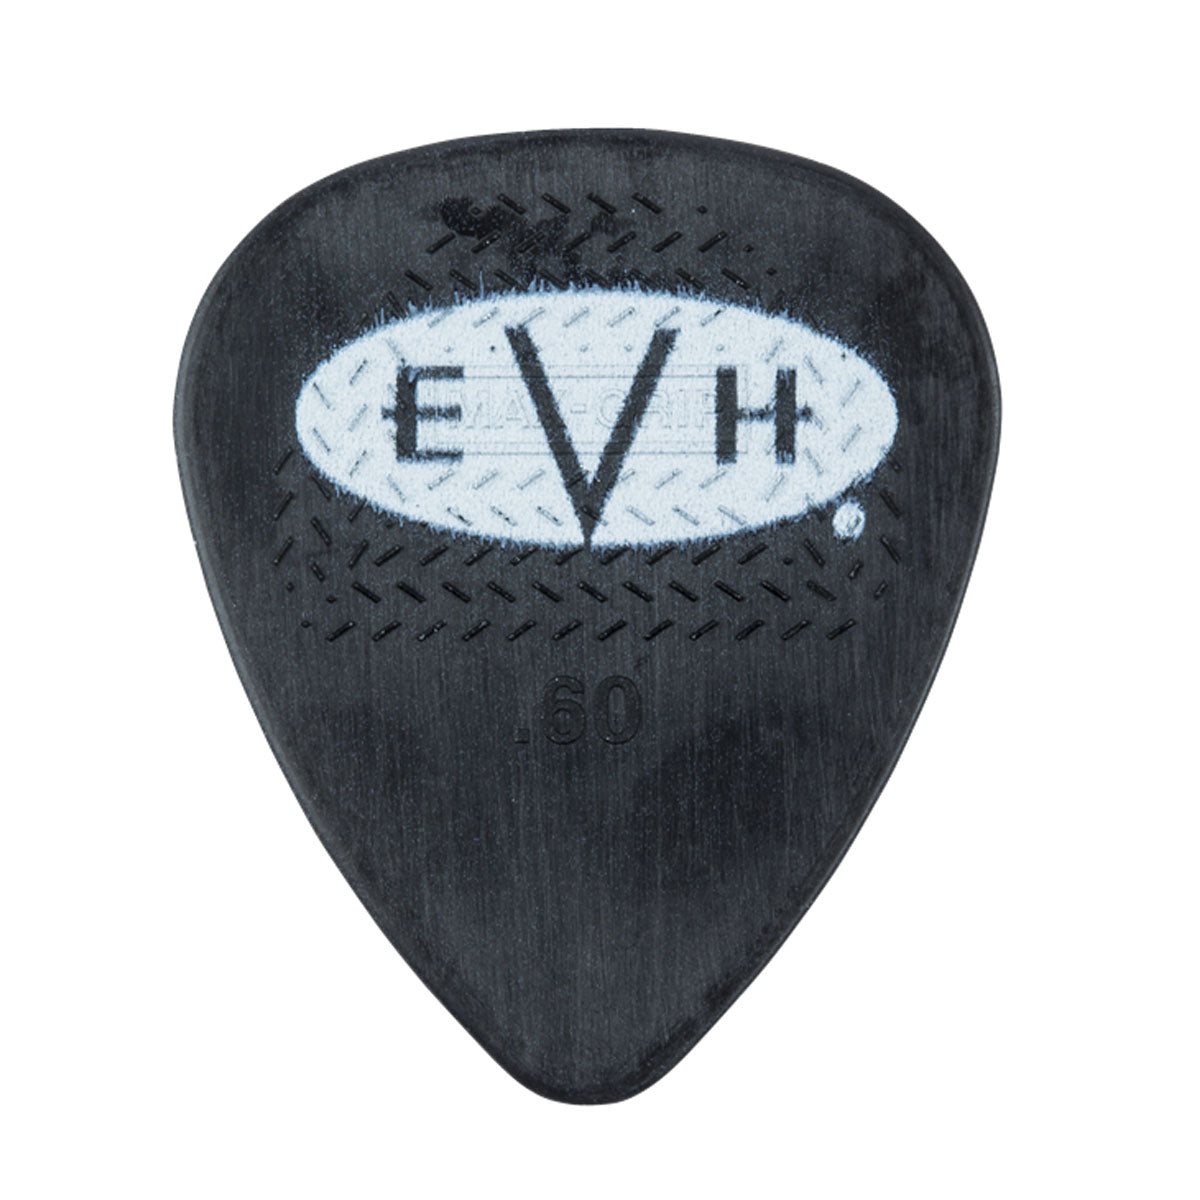 EVH Signature Picks, Black/White, .60mm, (6 Pack) - 0221351402